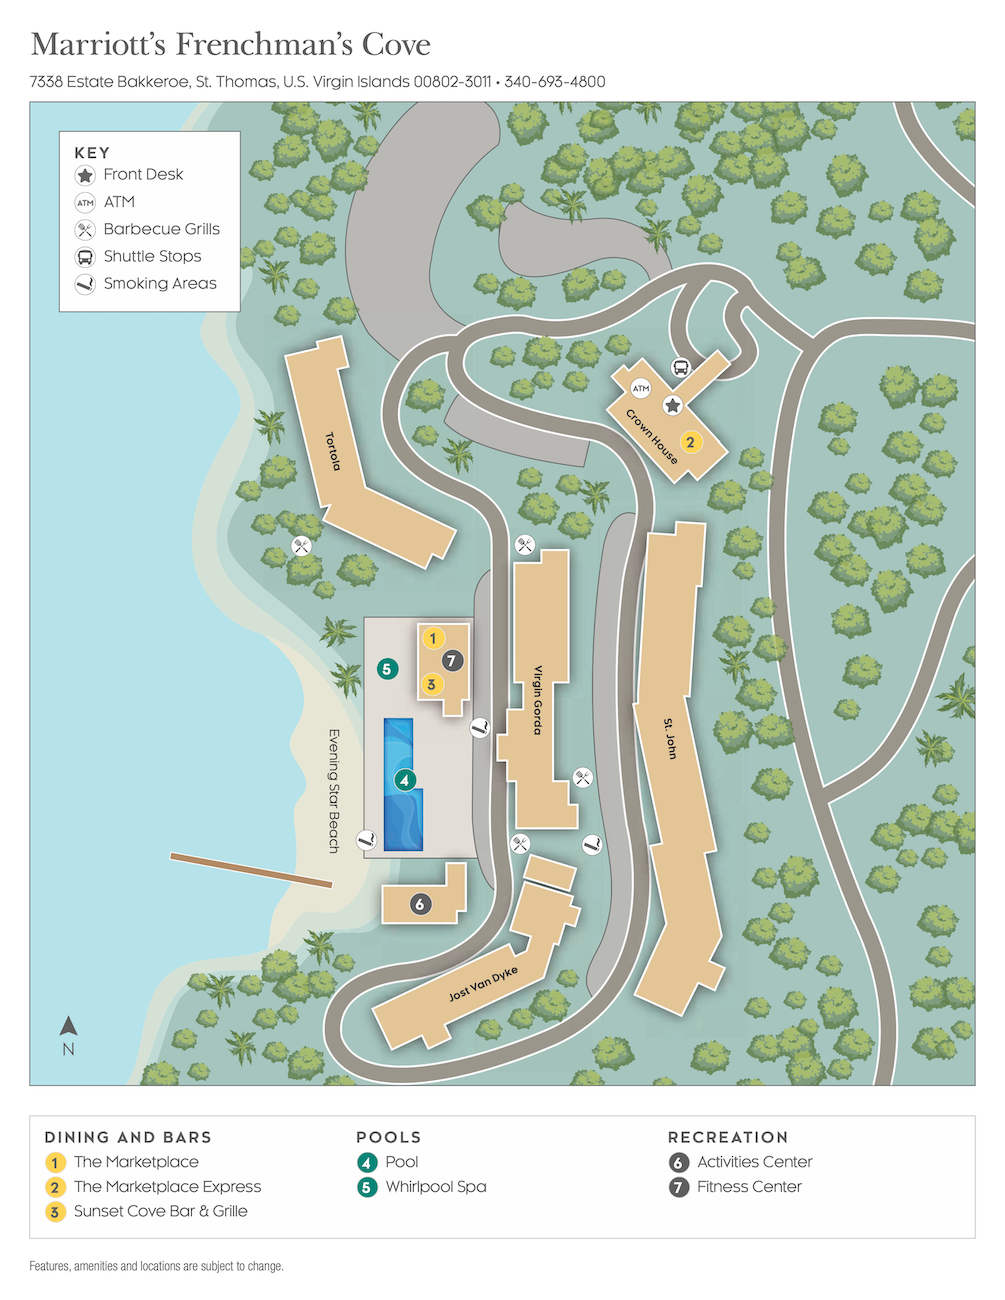 Marriott Frenchman's Cove Resort Map